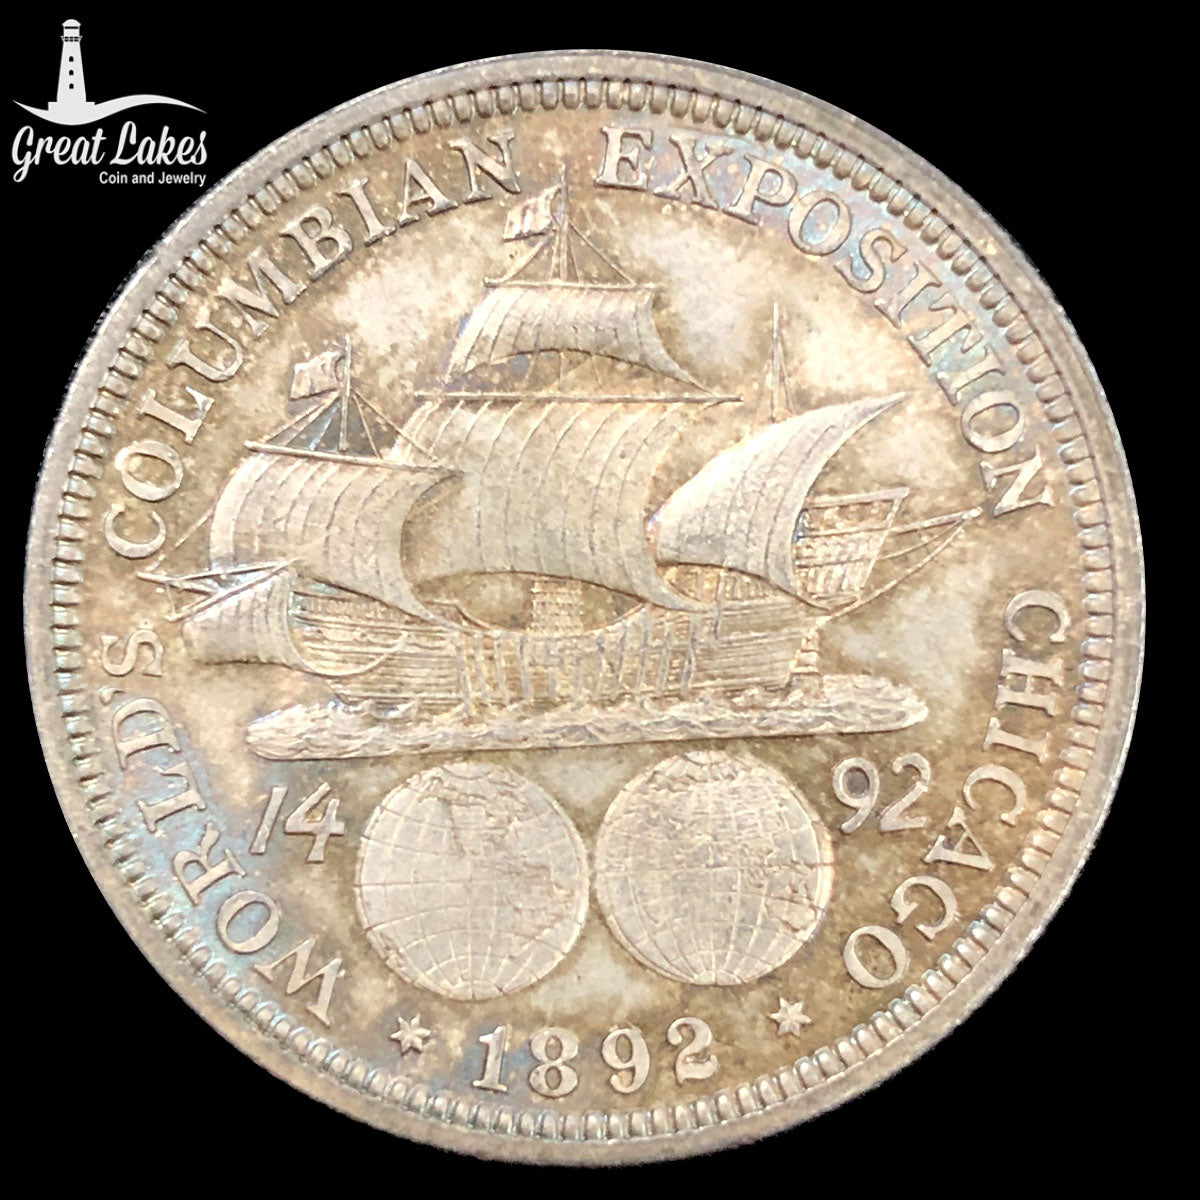 1892 Columbian Commemorative Half Dollar Toned (BU)